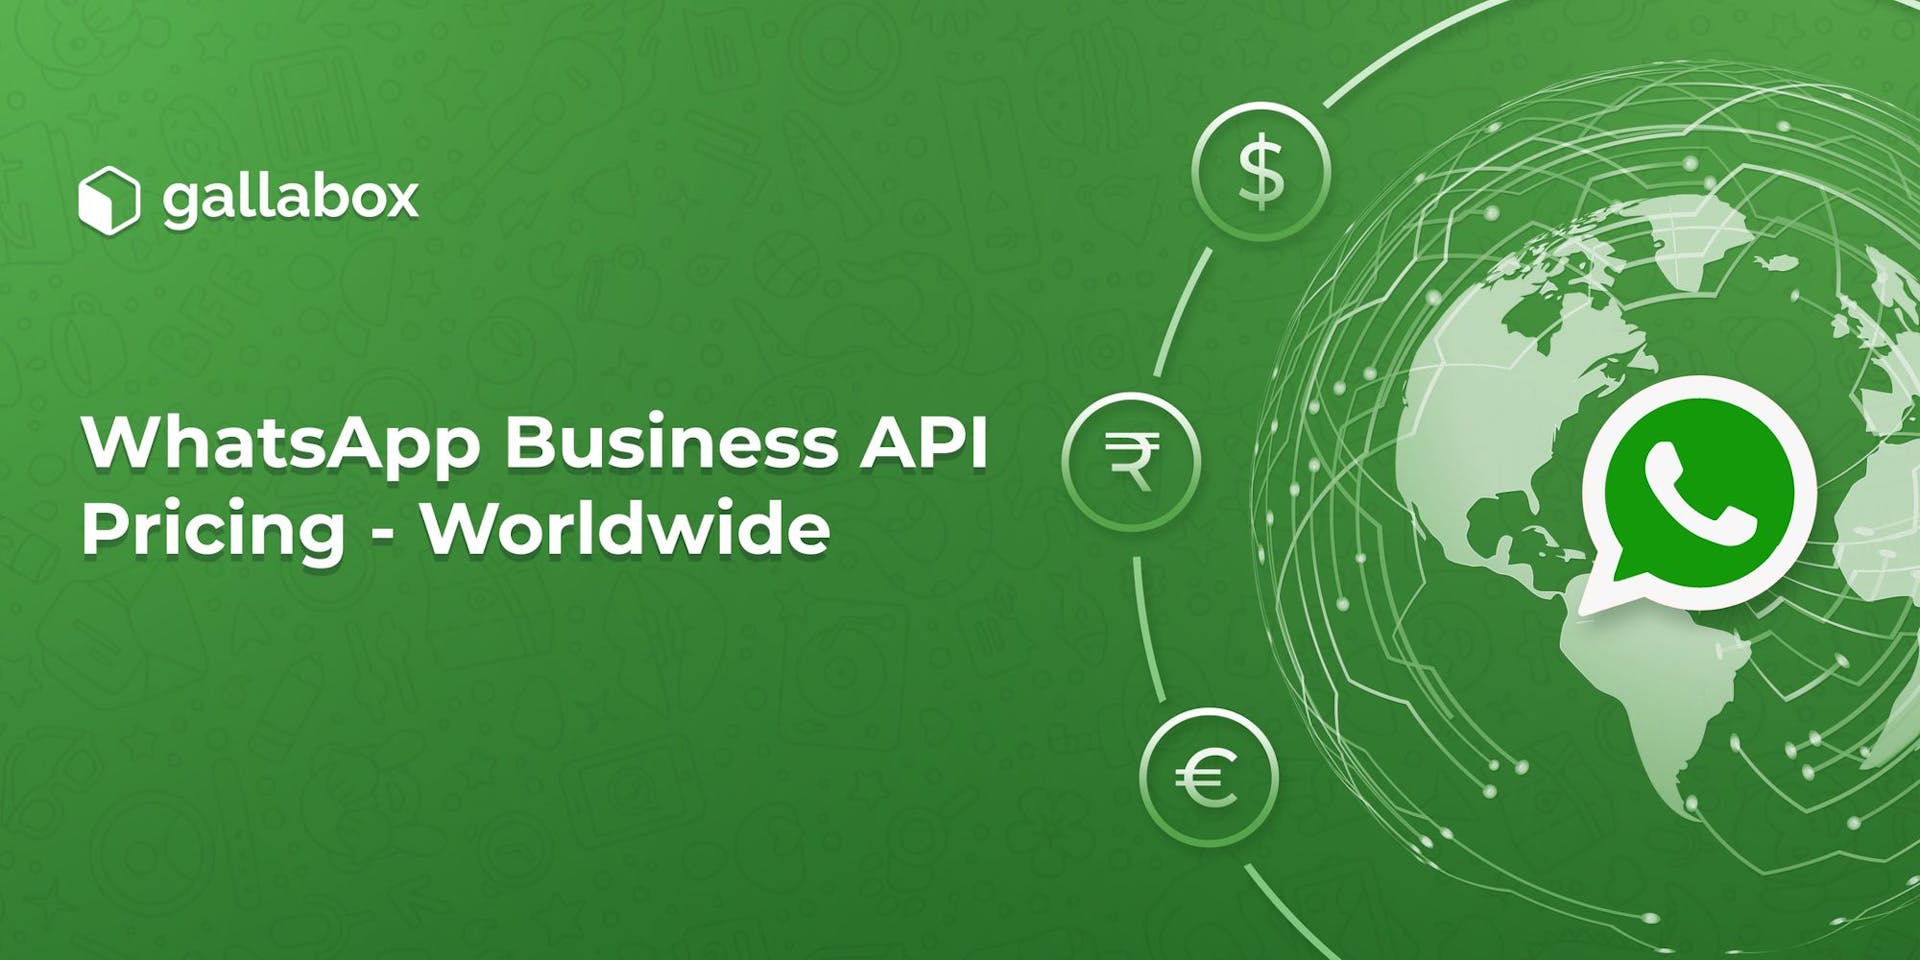 WhatsApp Business API Pricing - Worldwide